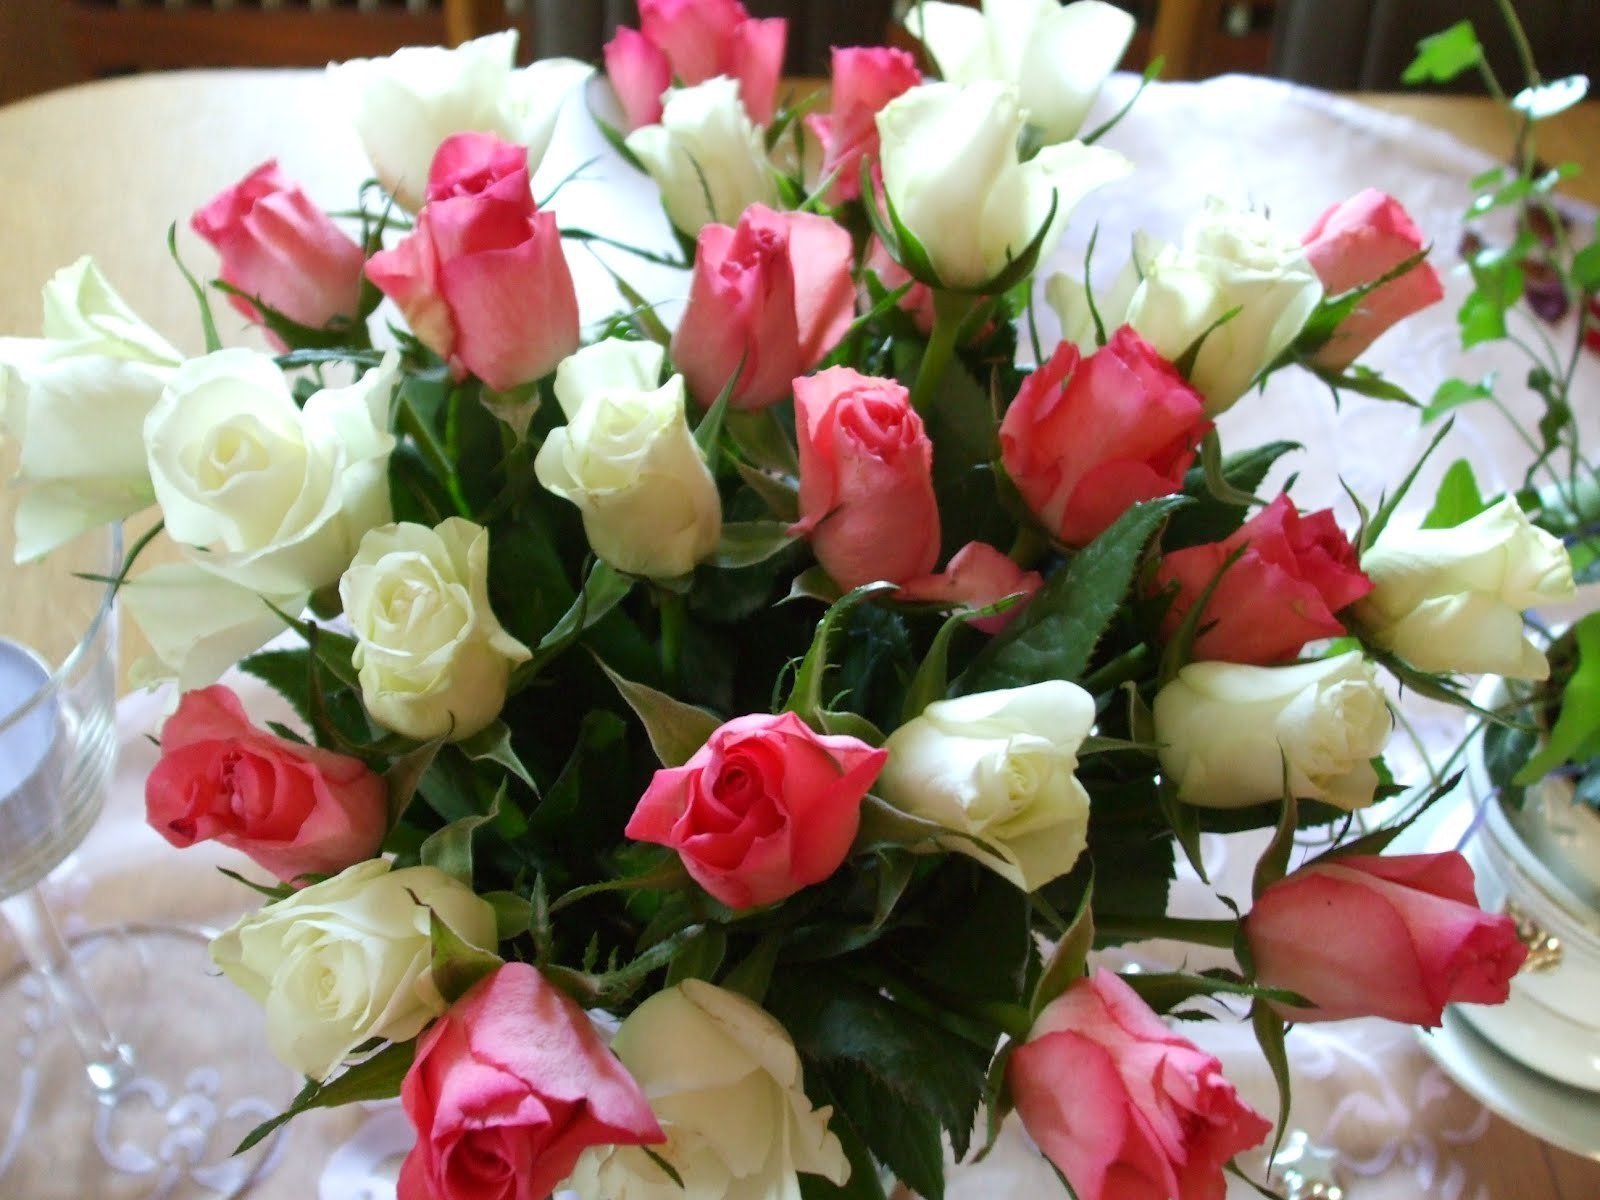 My flowers are beautiful. Красивый букет. Красивый букет роз. Шикарный букет роз. Красивый букет дома.